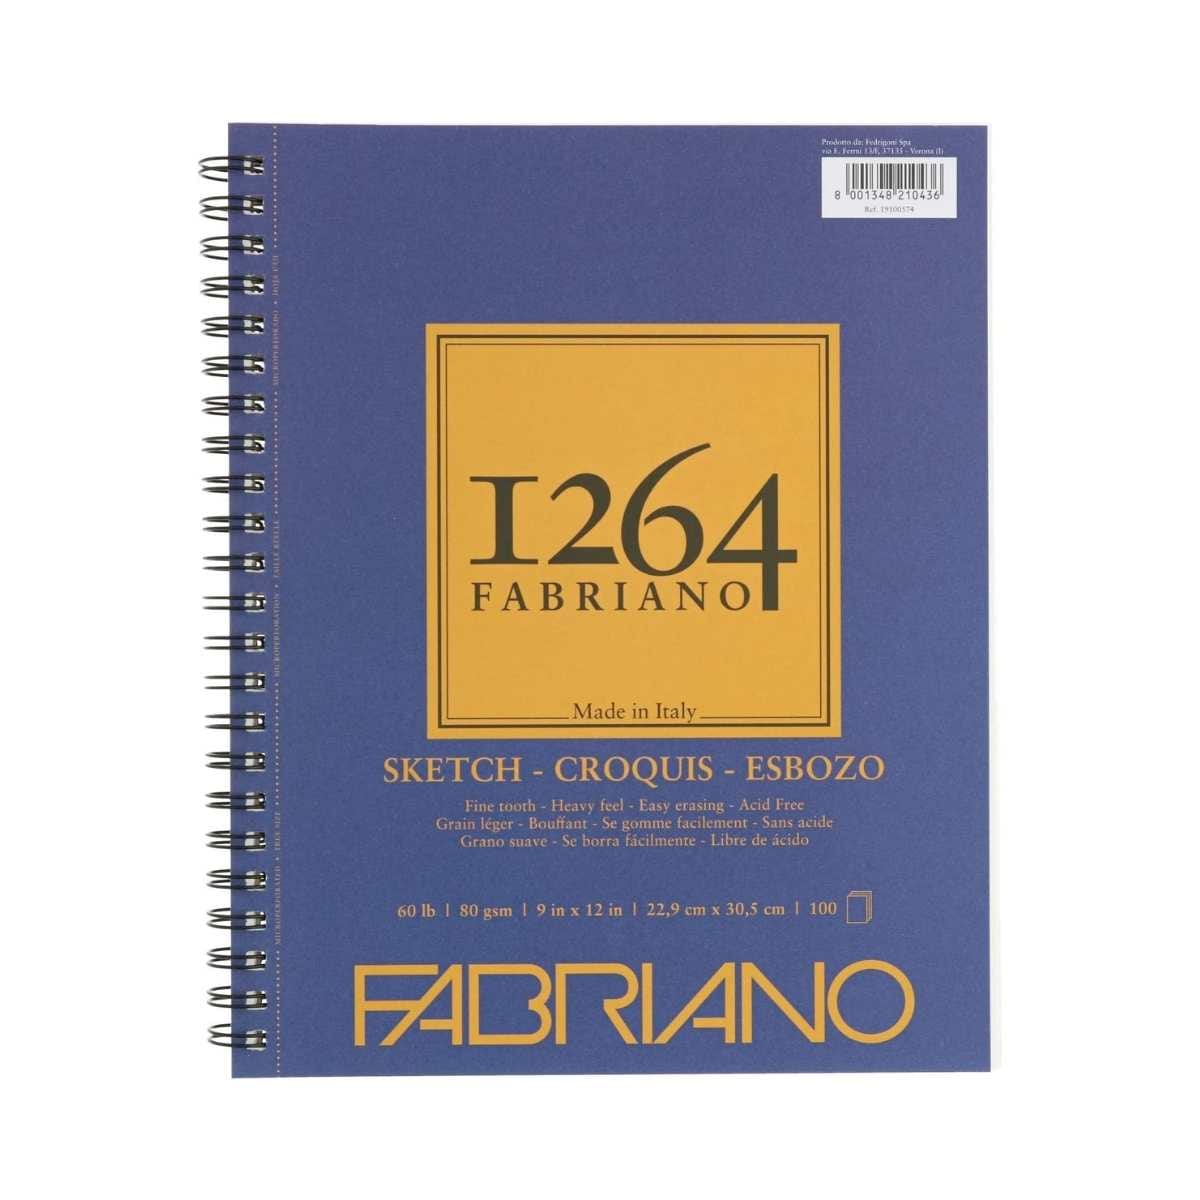 FABRIANO SKETCH PAD Fabriano - 1264 - Sketch Pad - 9x12" - 100 sheets - 60lb - Item #19100574